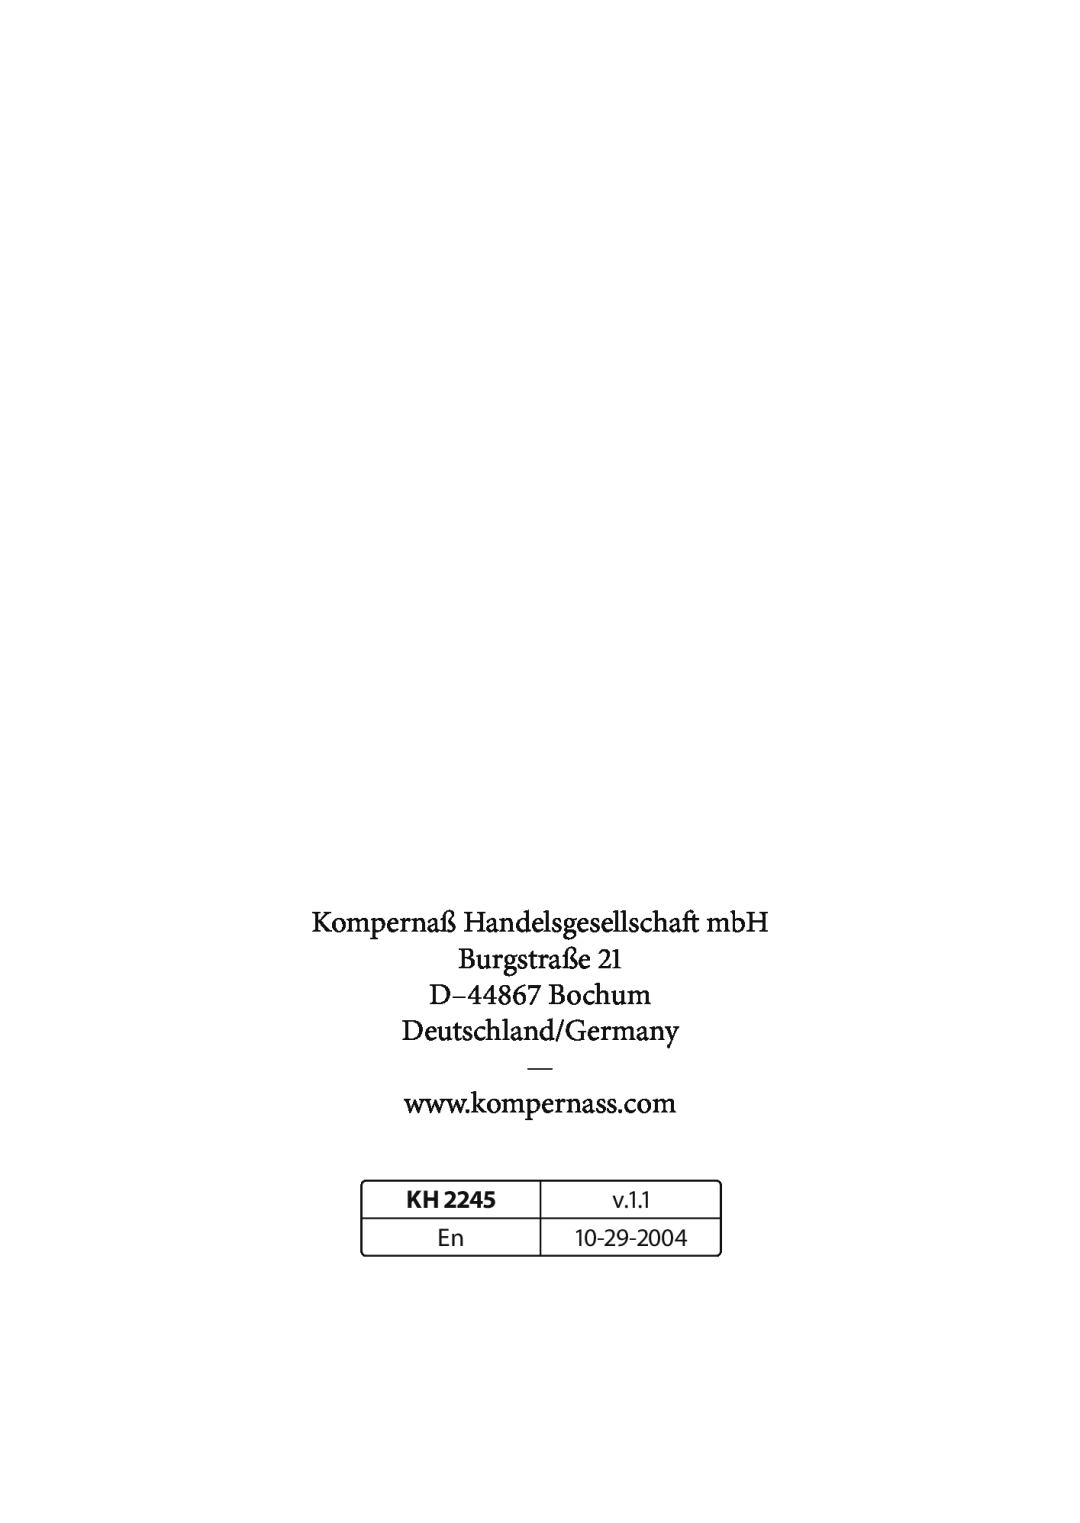 Kompernass KH 2245 manual Kompernaß Handelsgesellschaft mbH Burgstraße, D-44867Bochum Deutschland/Germany 